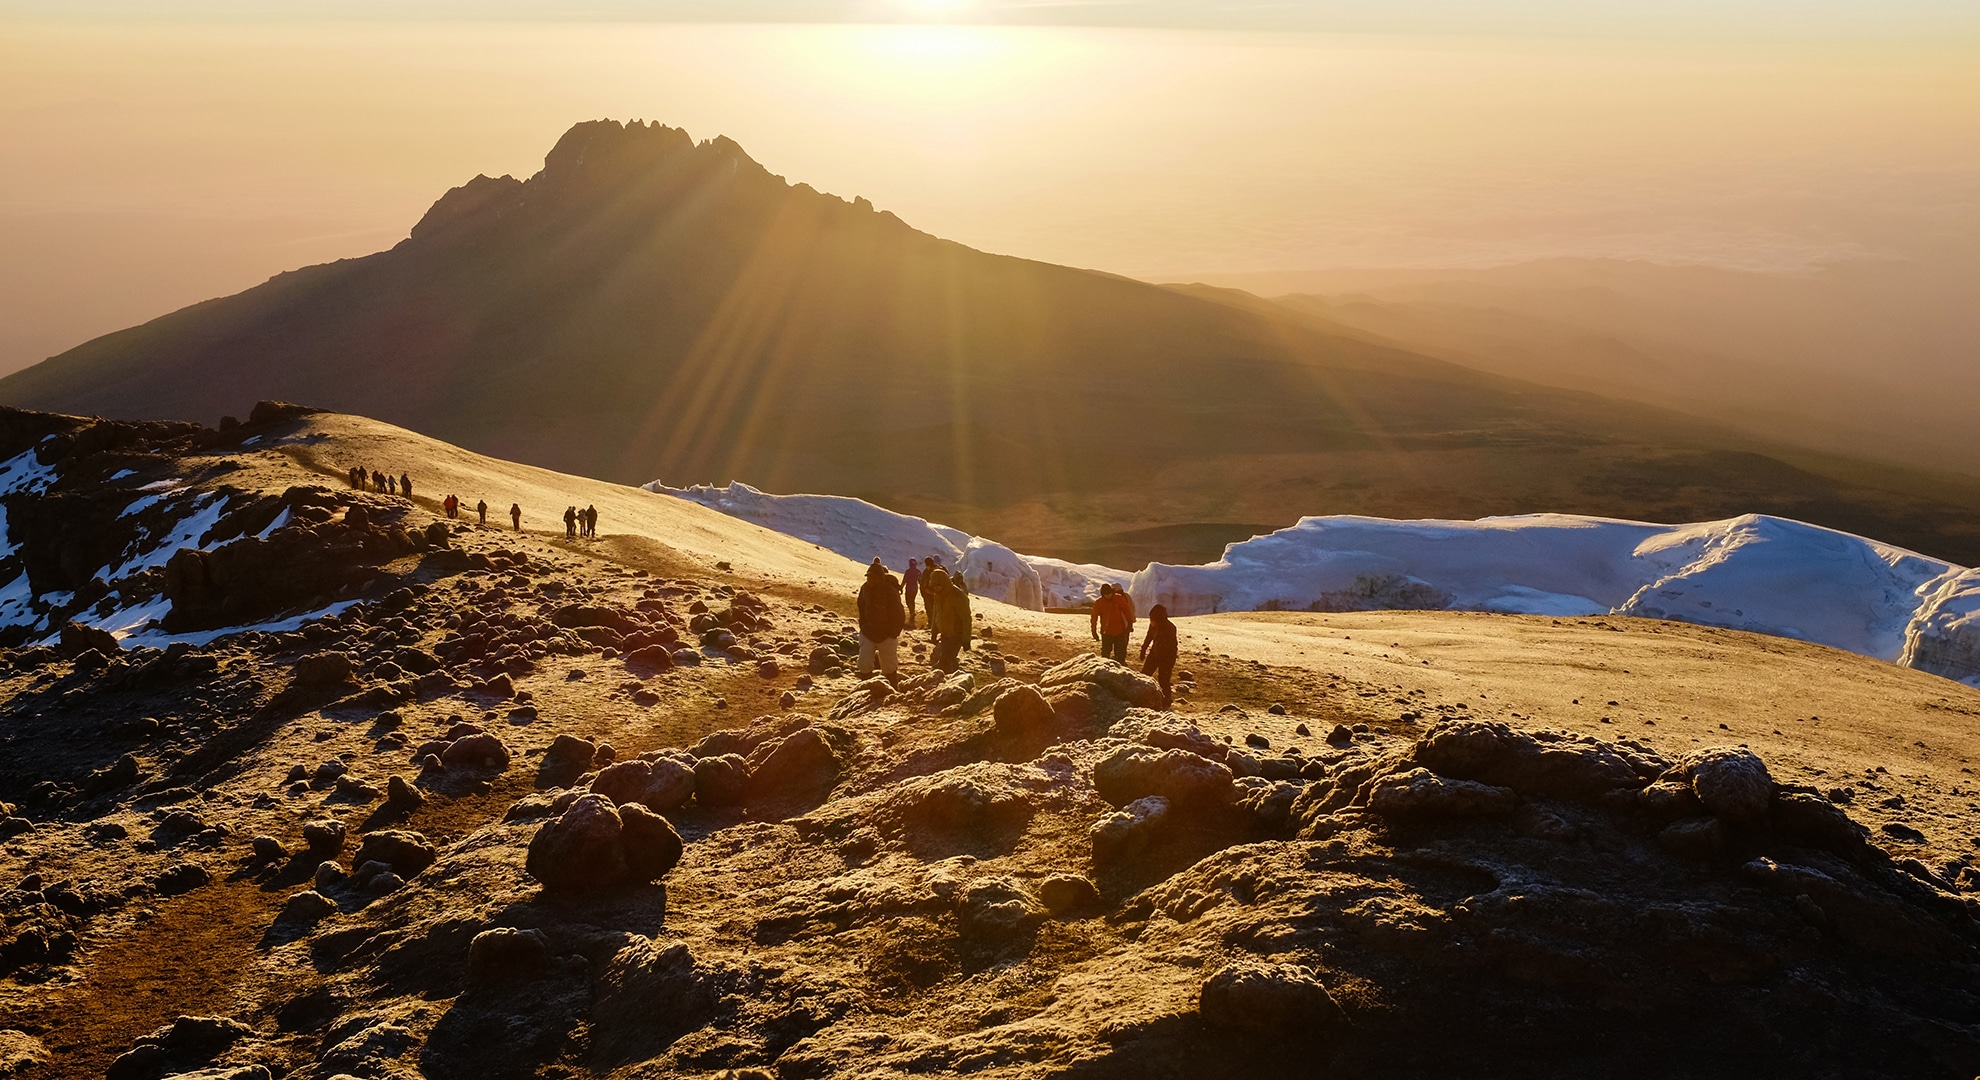 Sunrise at Stella point, Mount Kilimanjaro